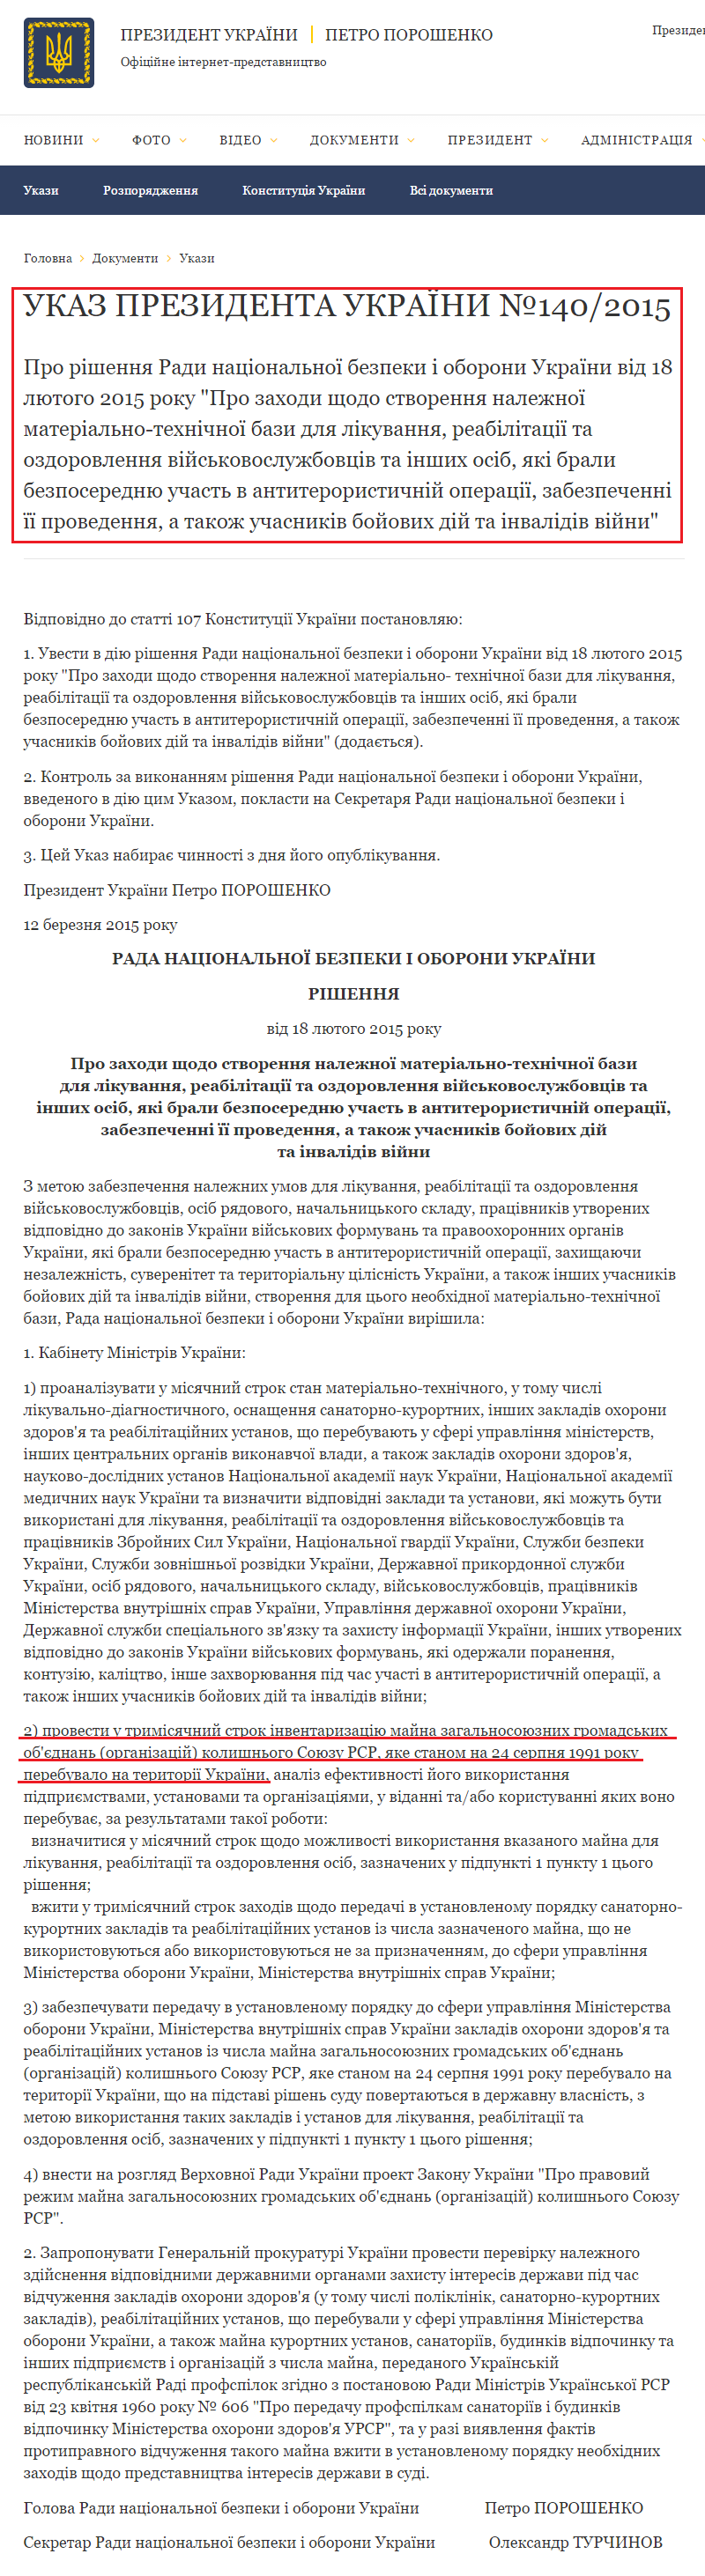 http://www.president.gov.ua/documents/1402015-18602